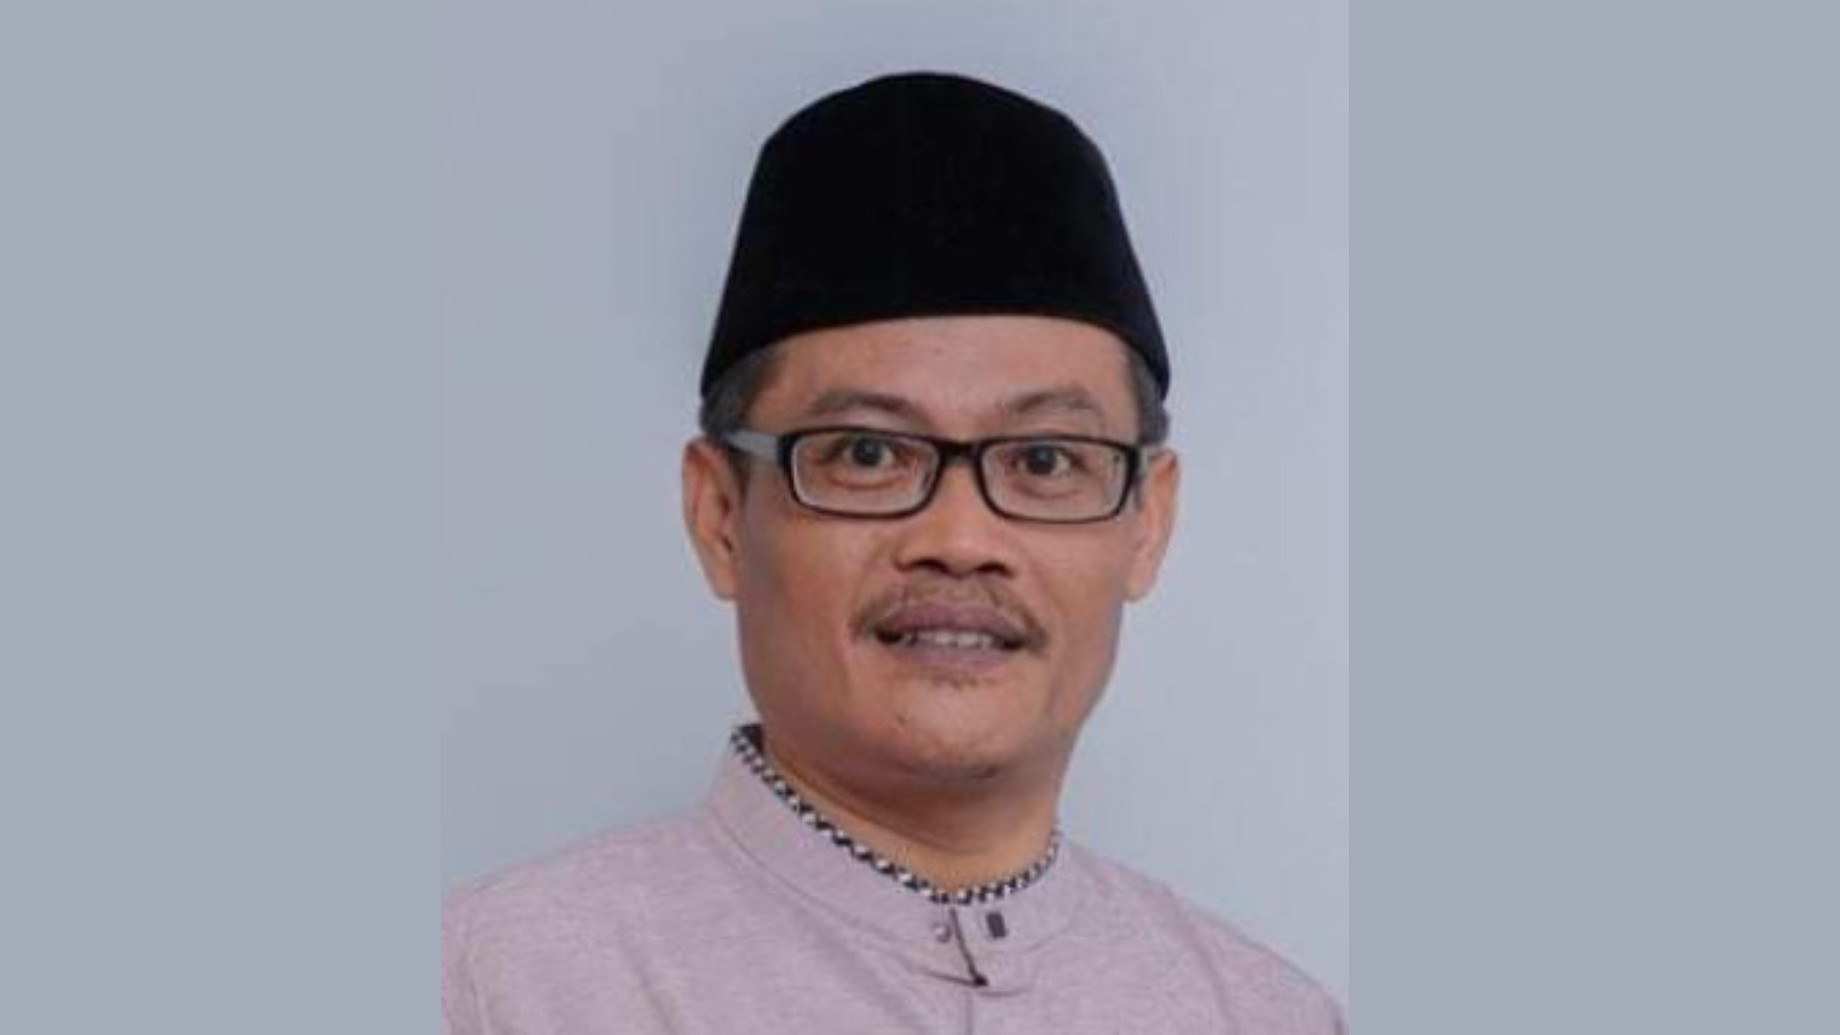 M. Ishom El Saha (Dosen UIN Sultan Maulana Hasanuddin, Banten)